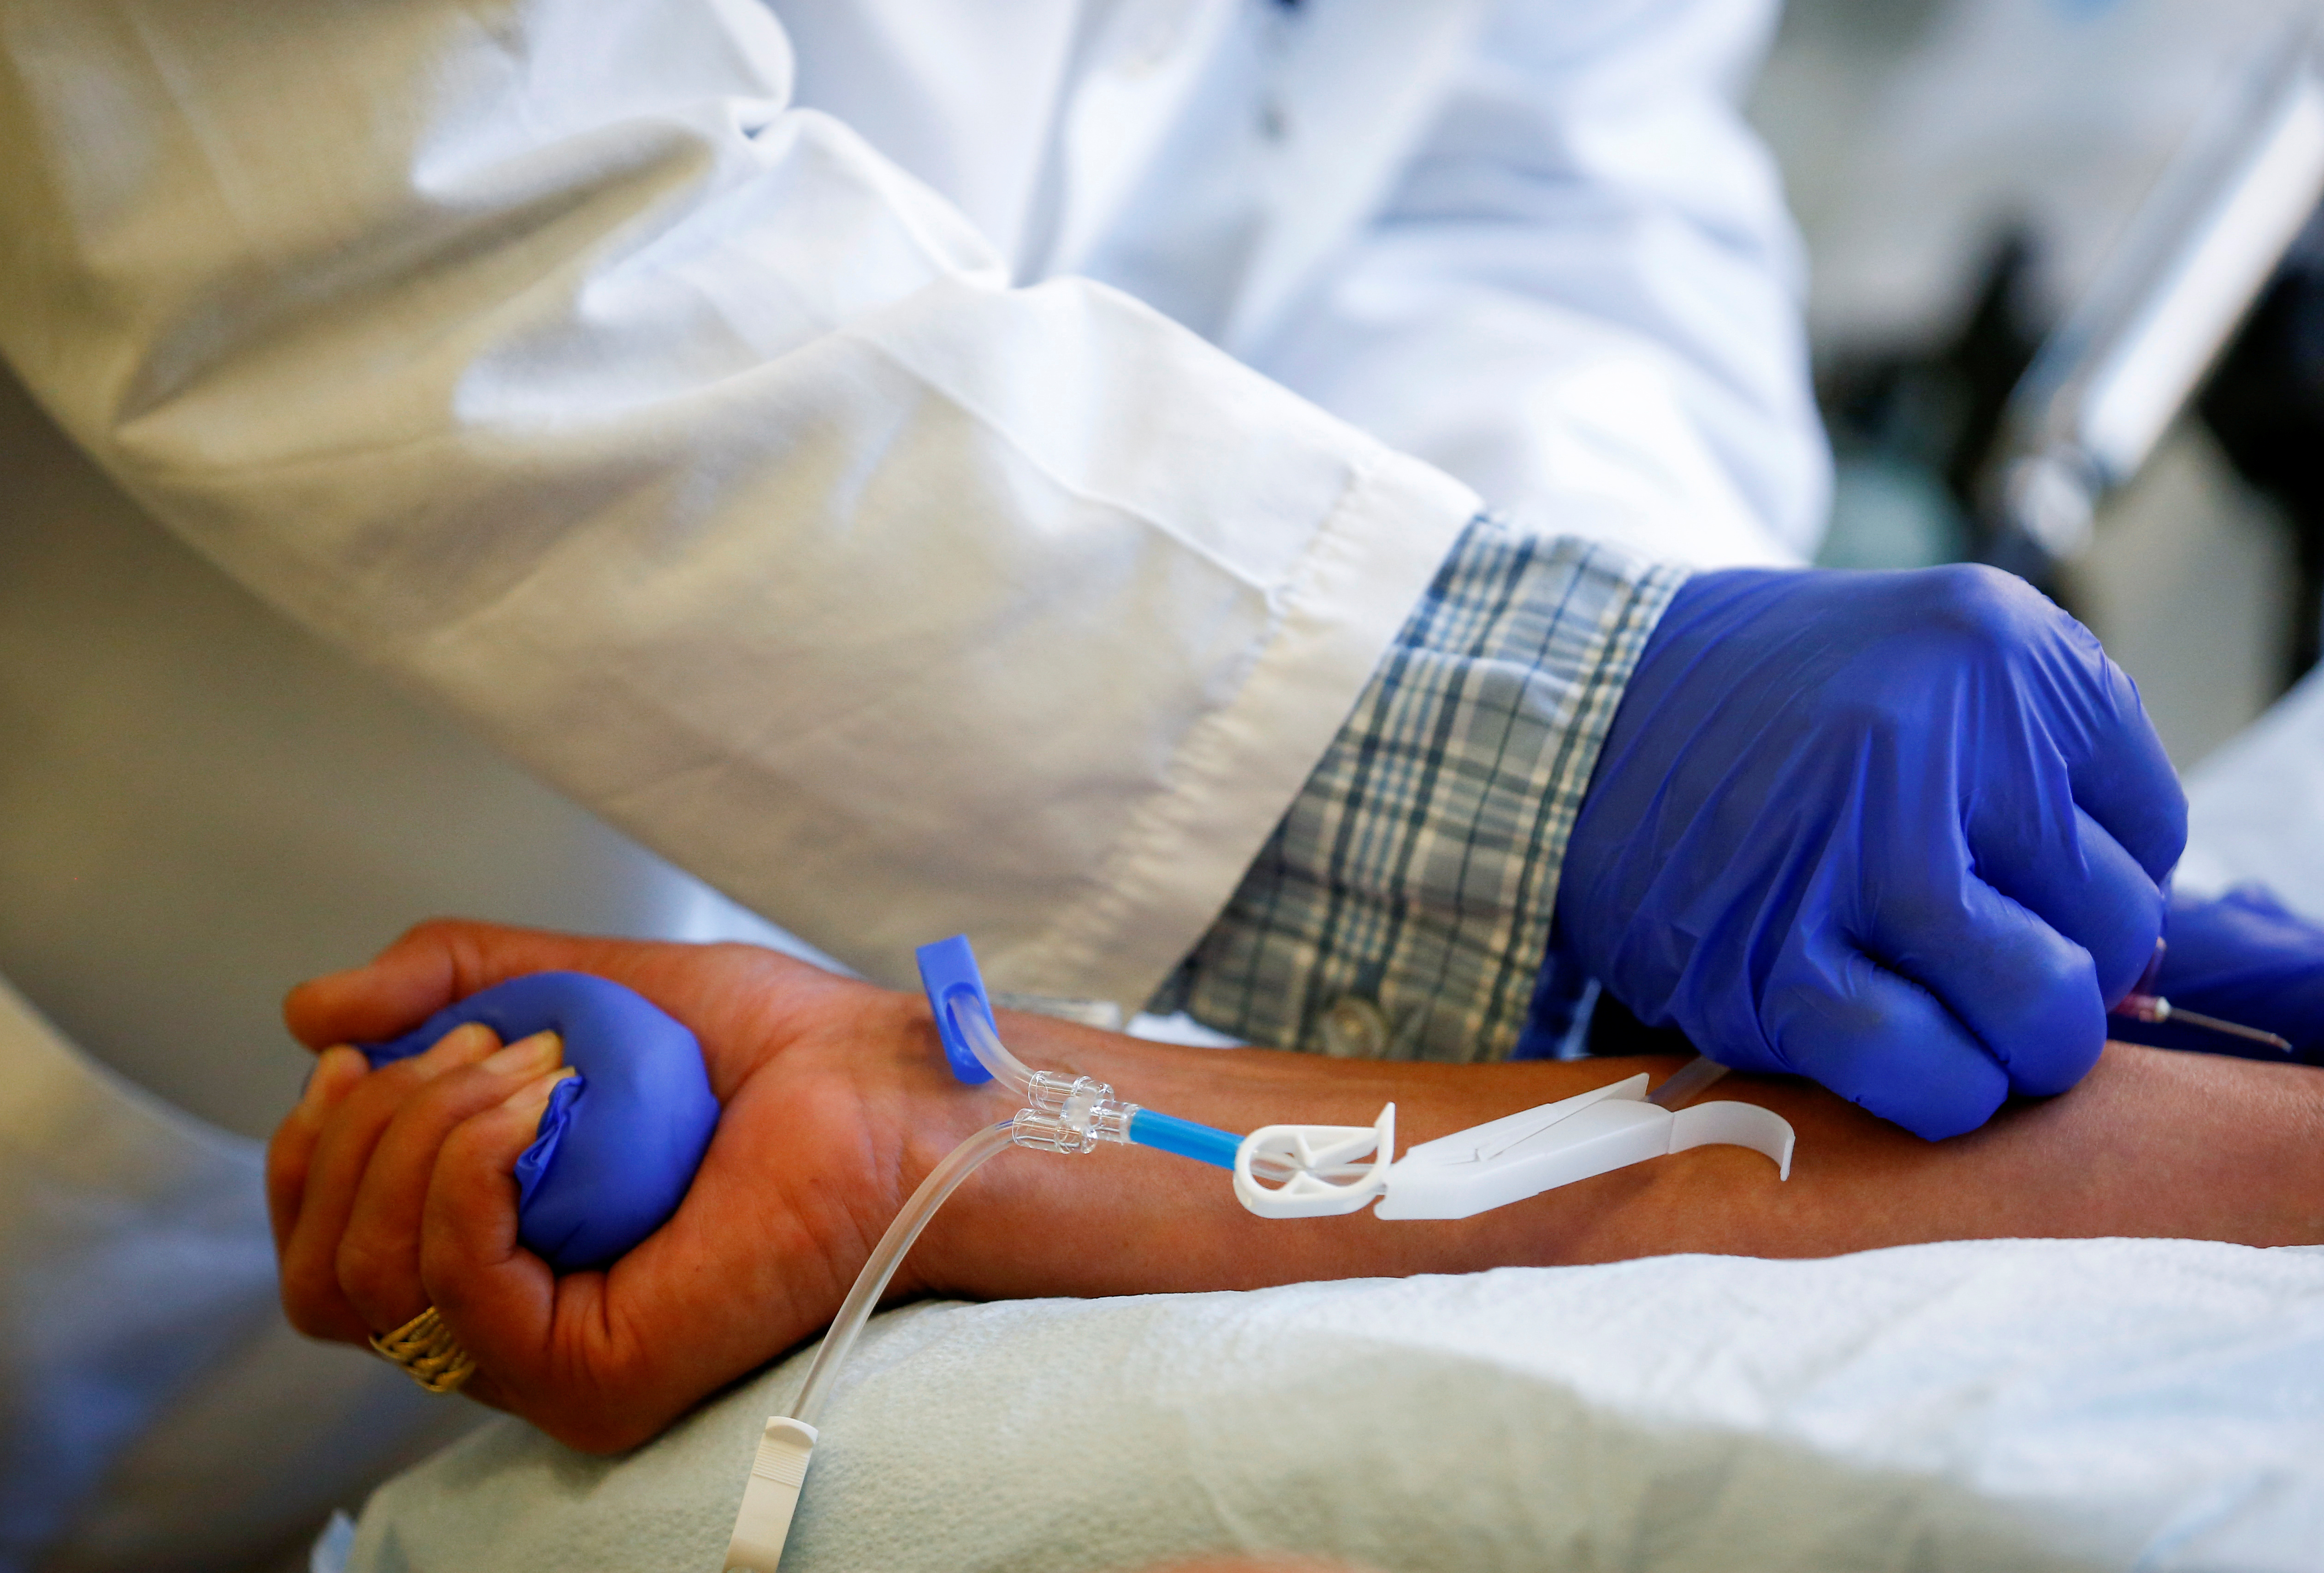 Regular voluntary donations help maintain hospital blood banks